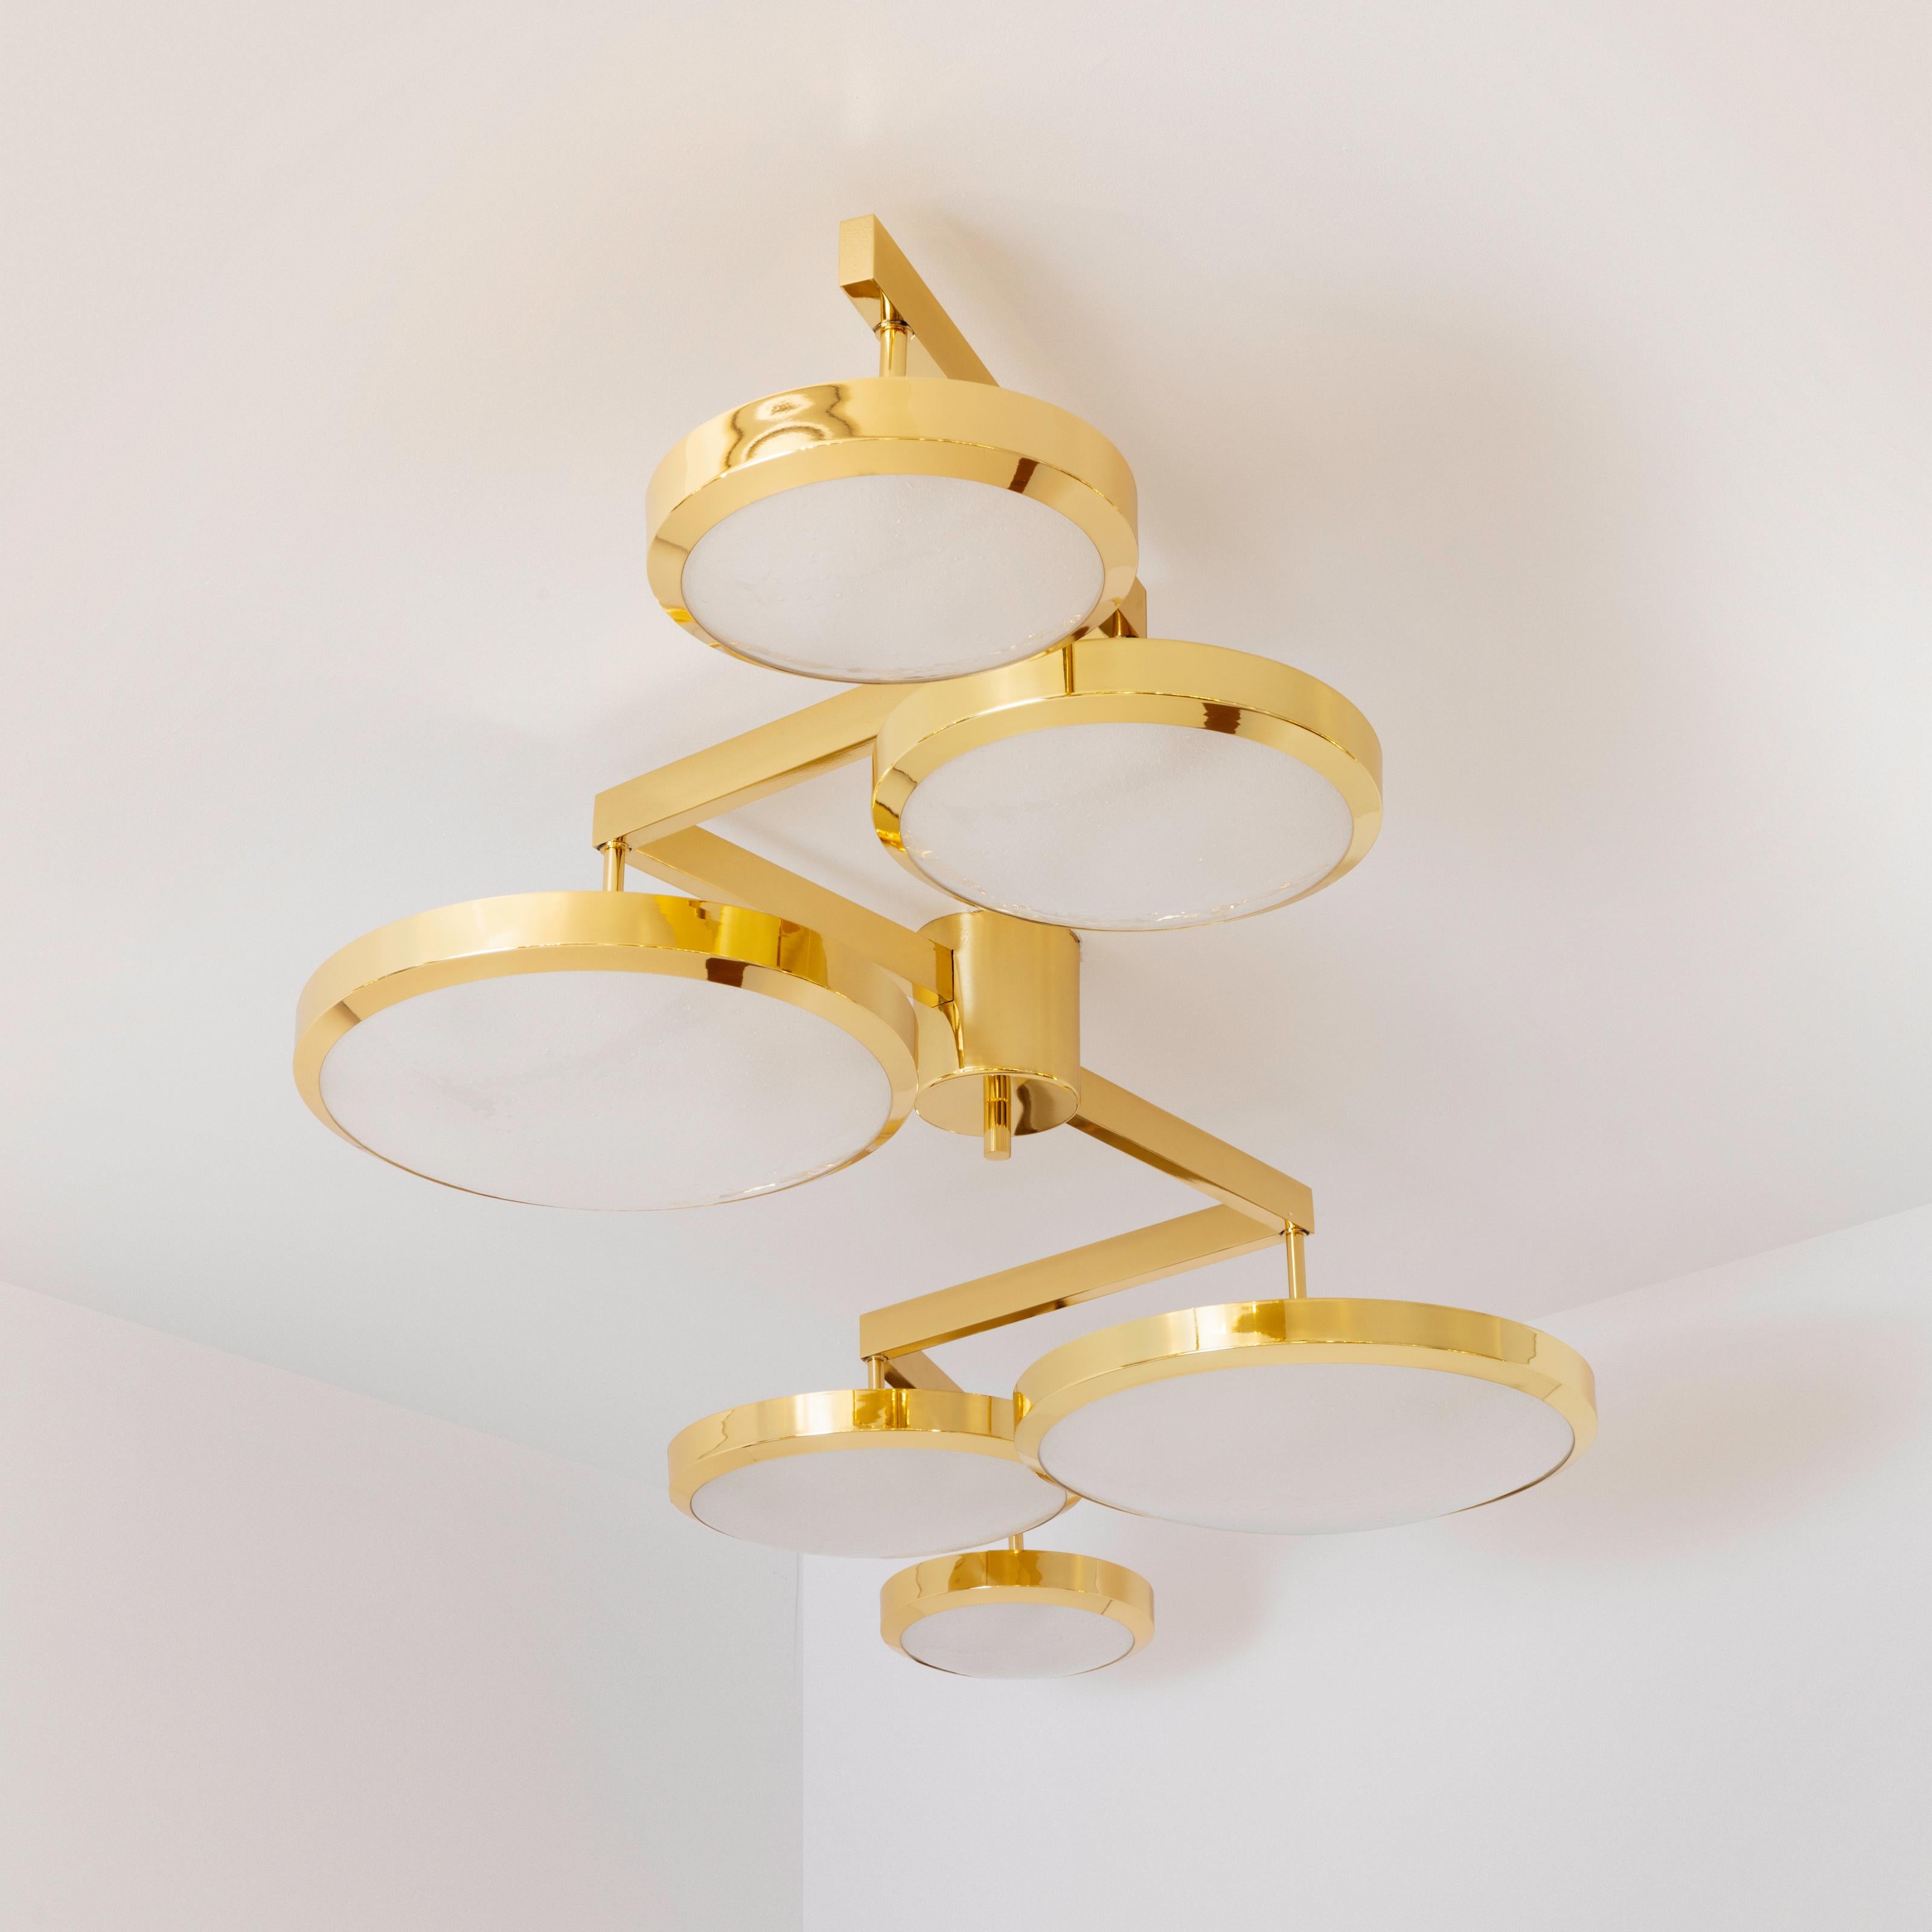 Contemporary Geometria Sospesa Ceiling Light by Gaspare Asaro-Satin Brass Finish For Sale